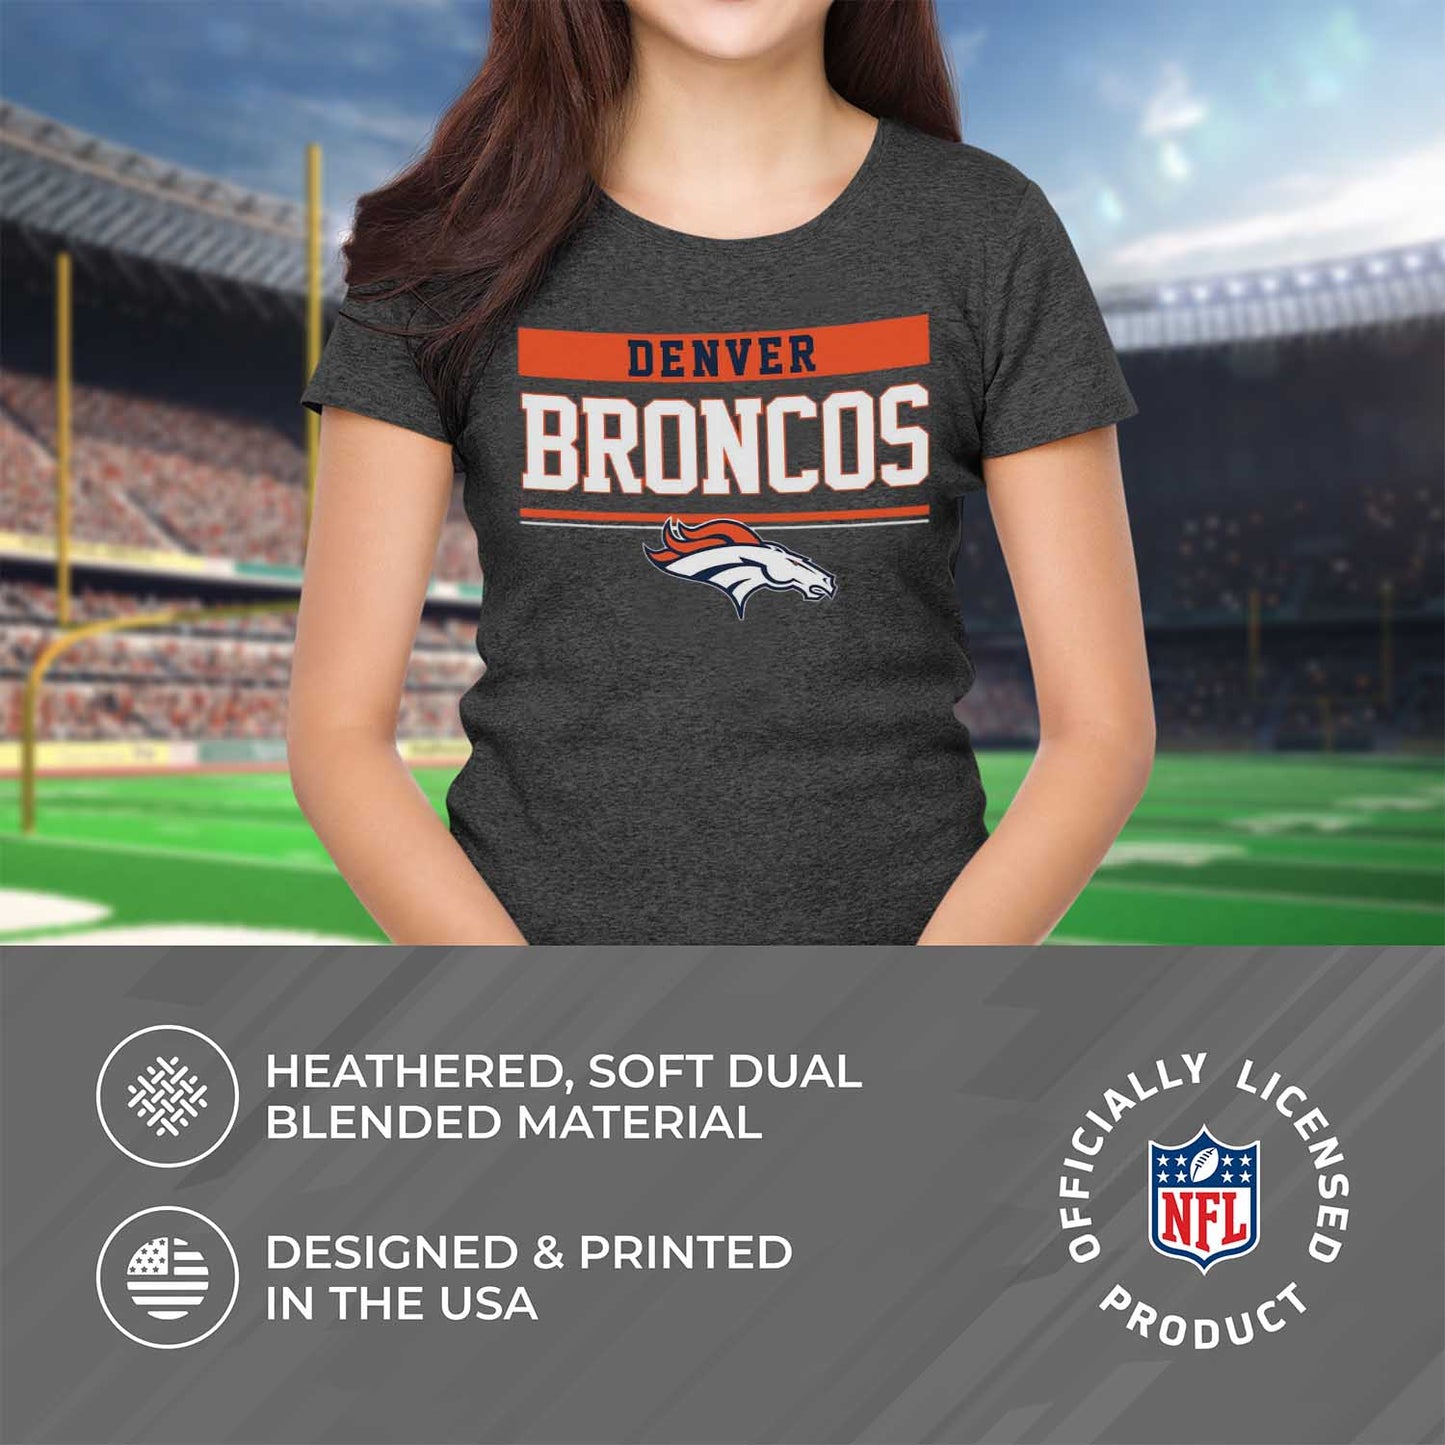 Denver Broncos NFL Women's Team Block Charcoal Tagless T-Shirt - Charcoal